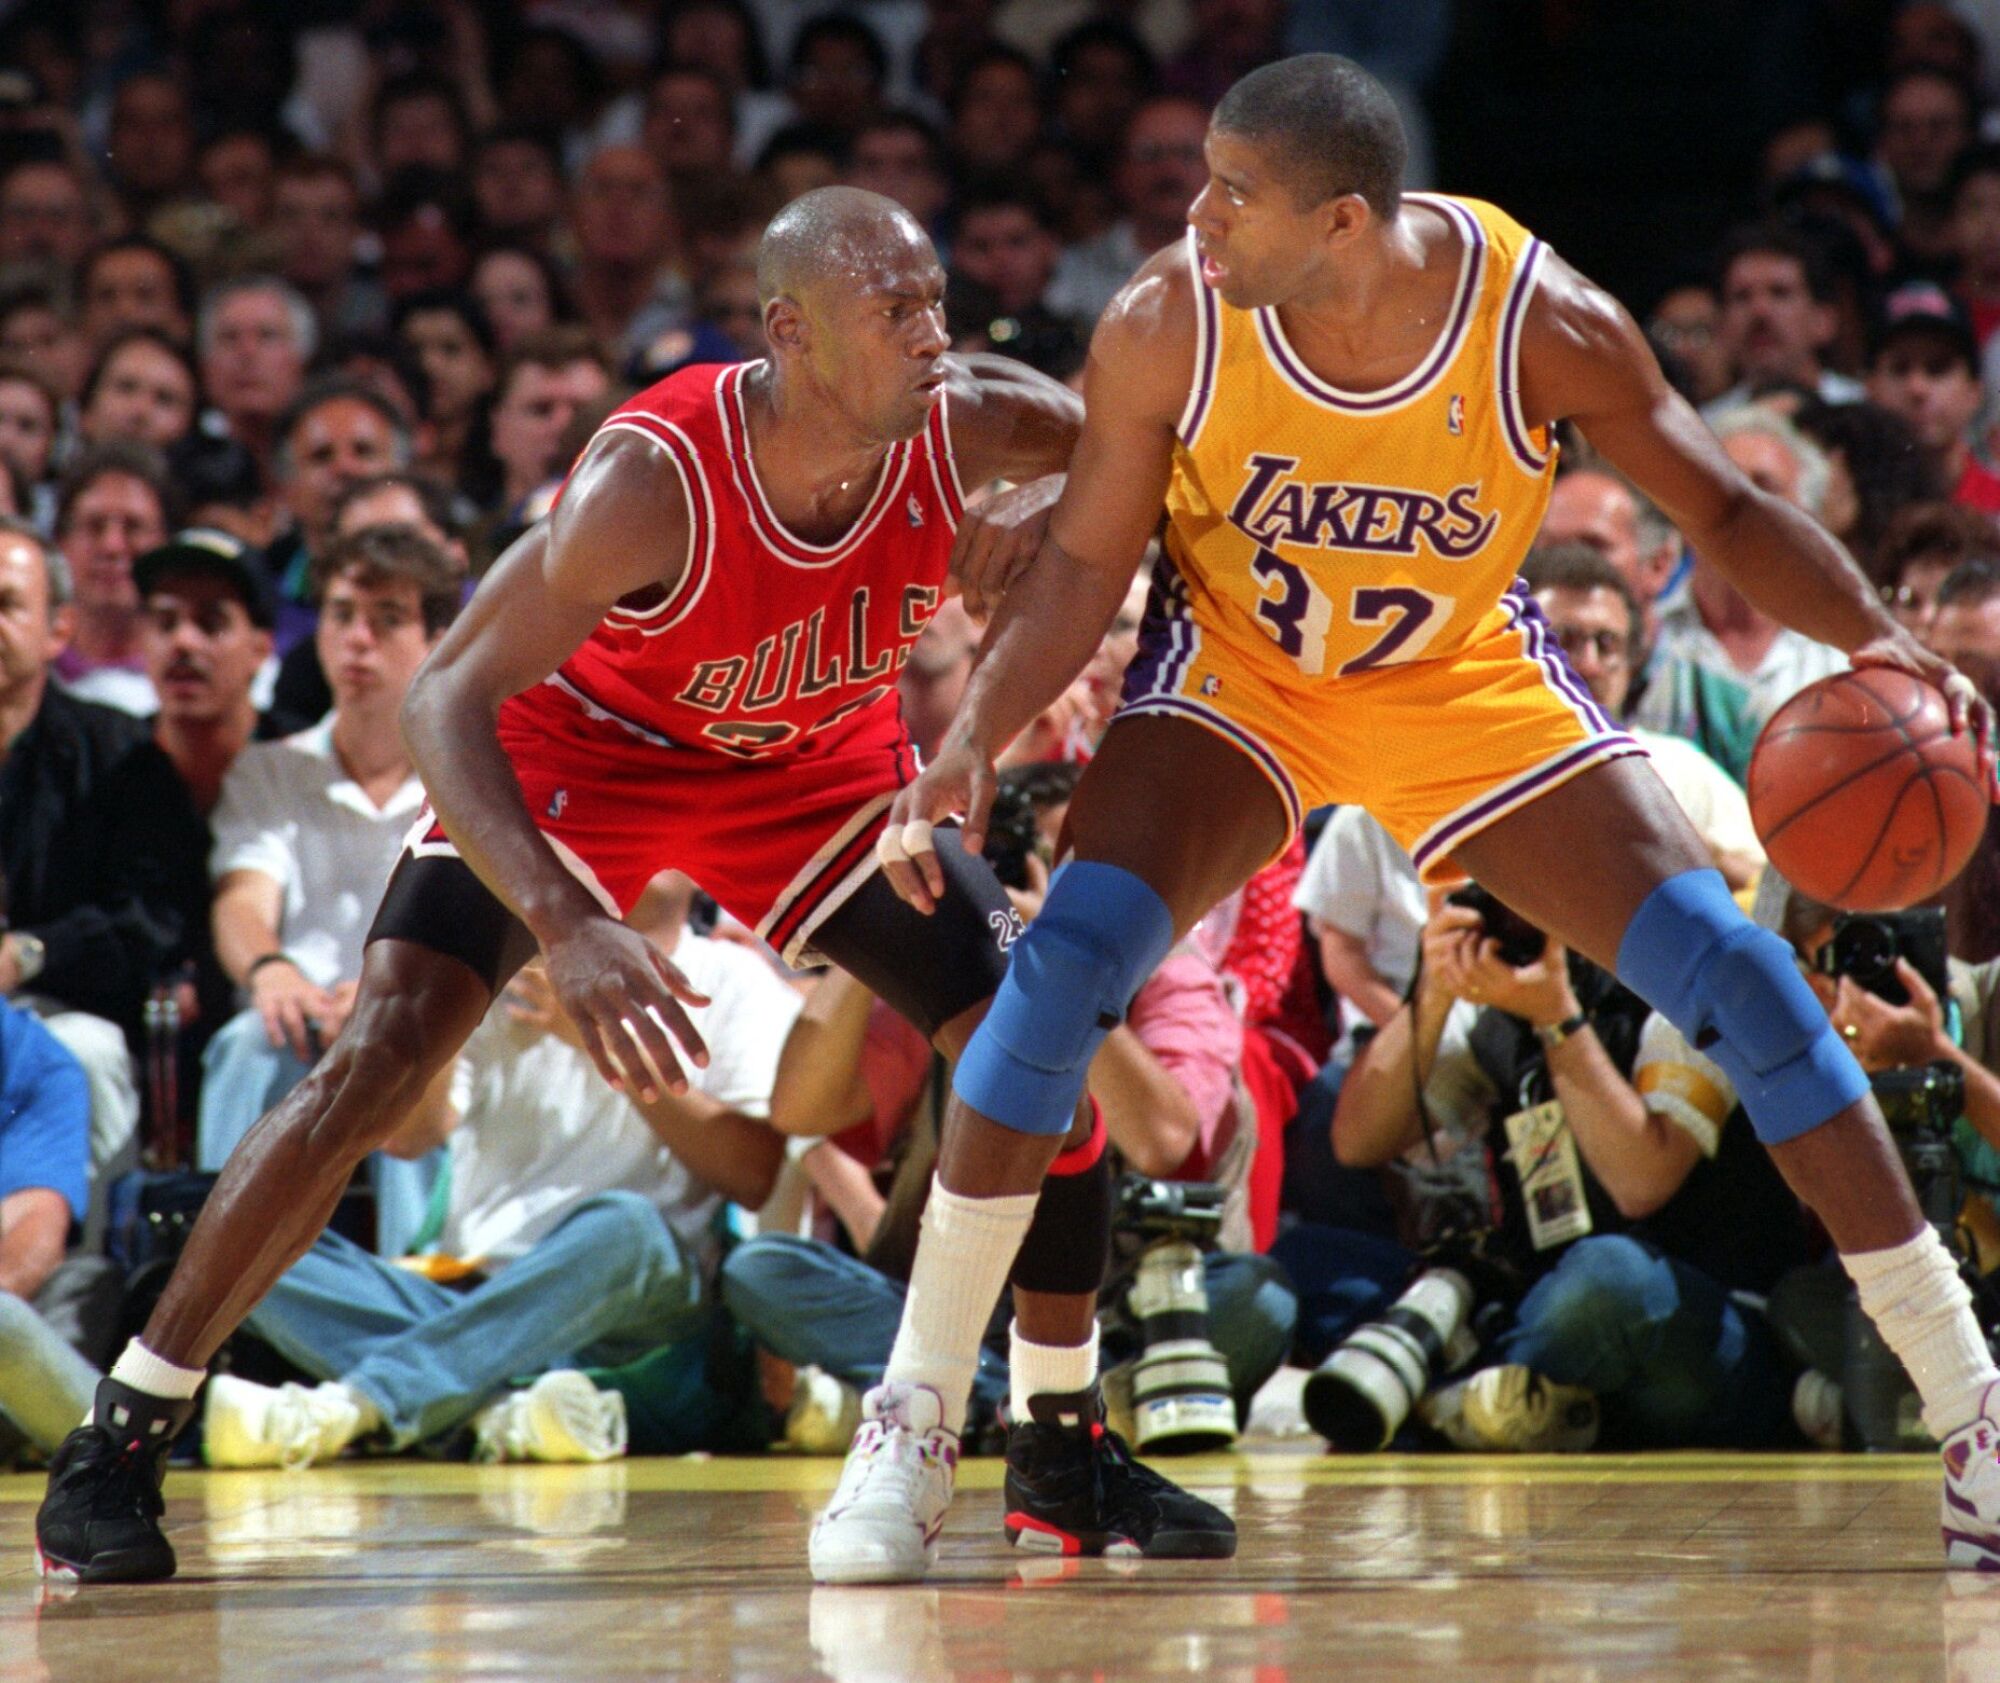 Magic Johnson tries to move past Michael Jordan during the 1991 NBA Finals